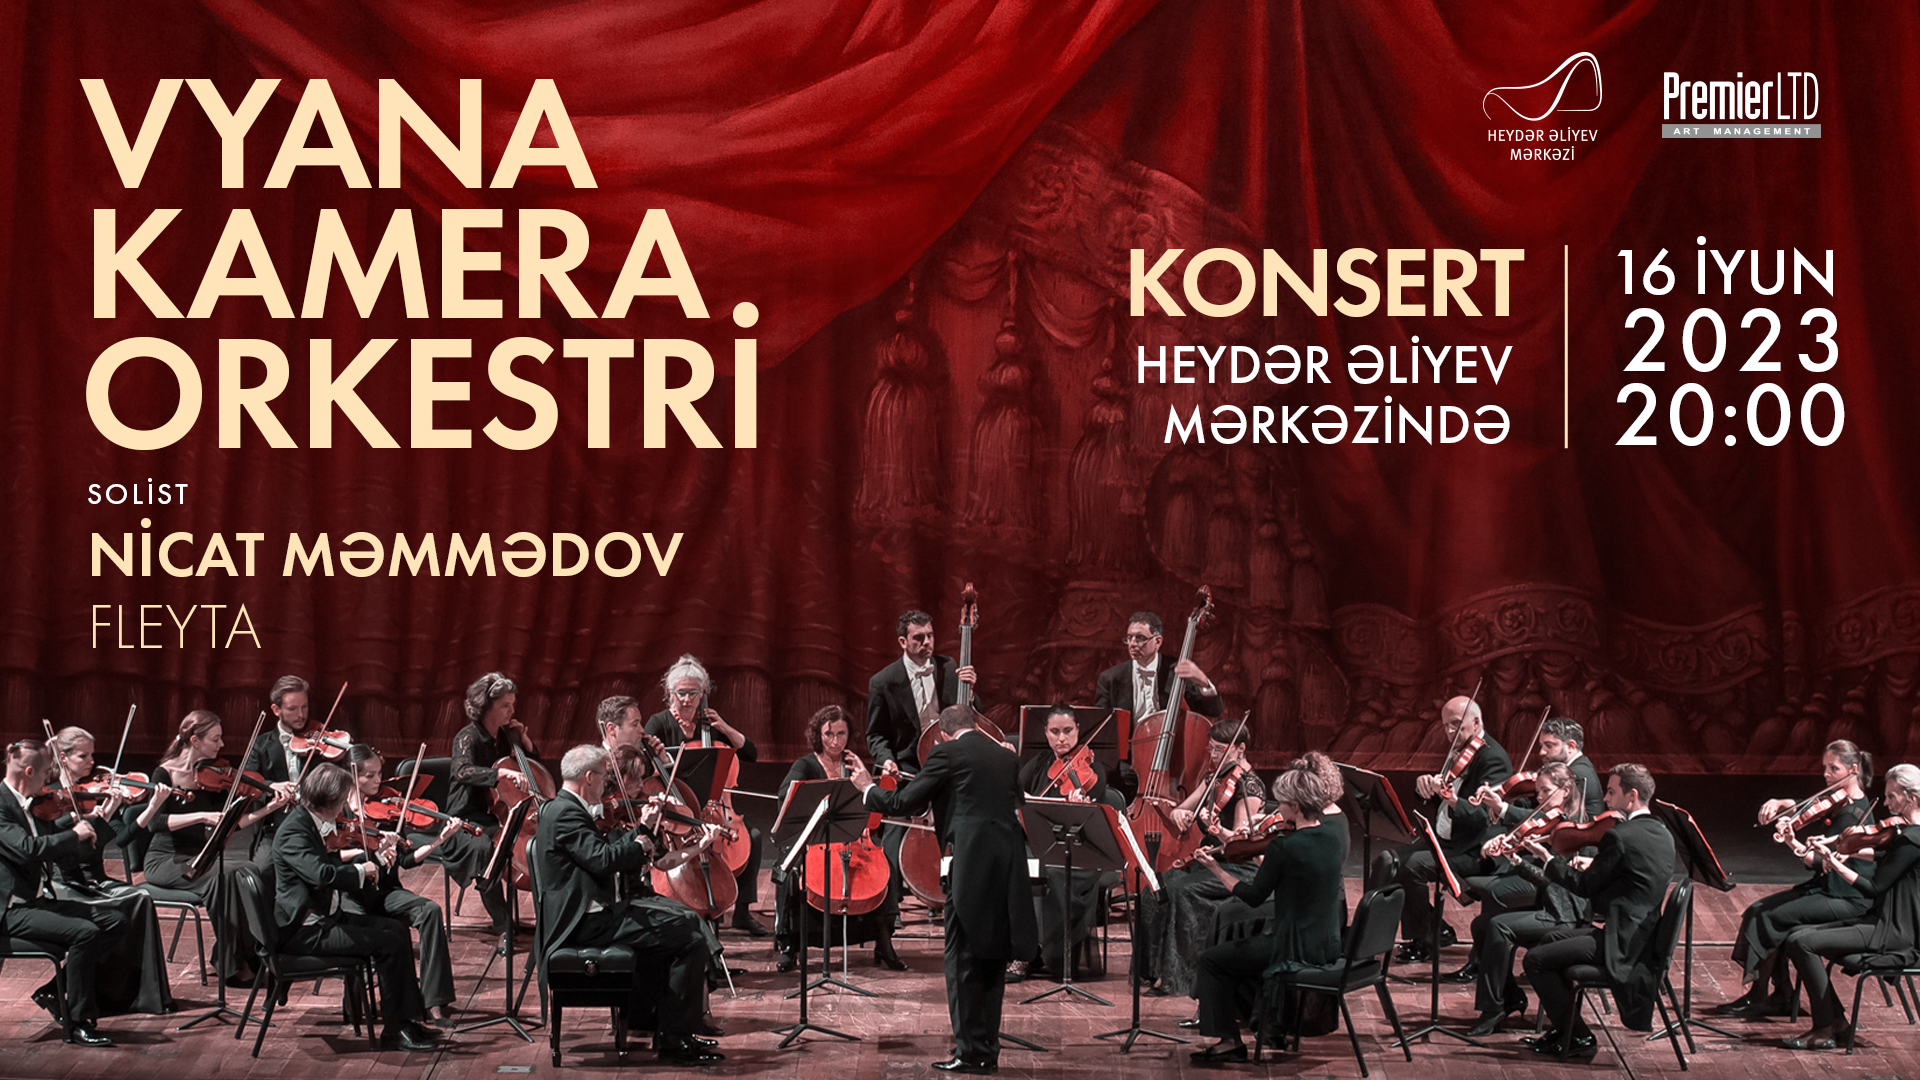 Vienna Chamber Orchestra to give concert at Heydar Aliyev Center